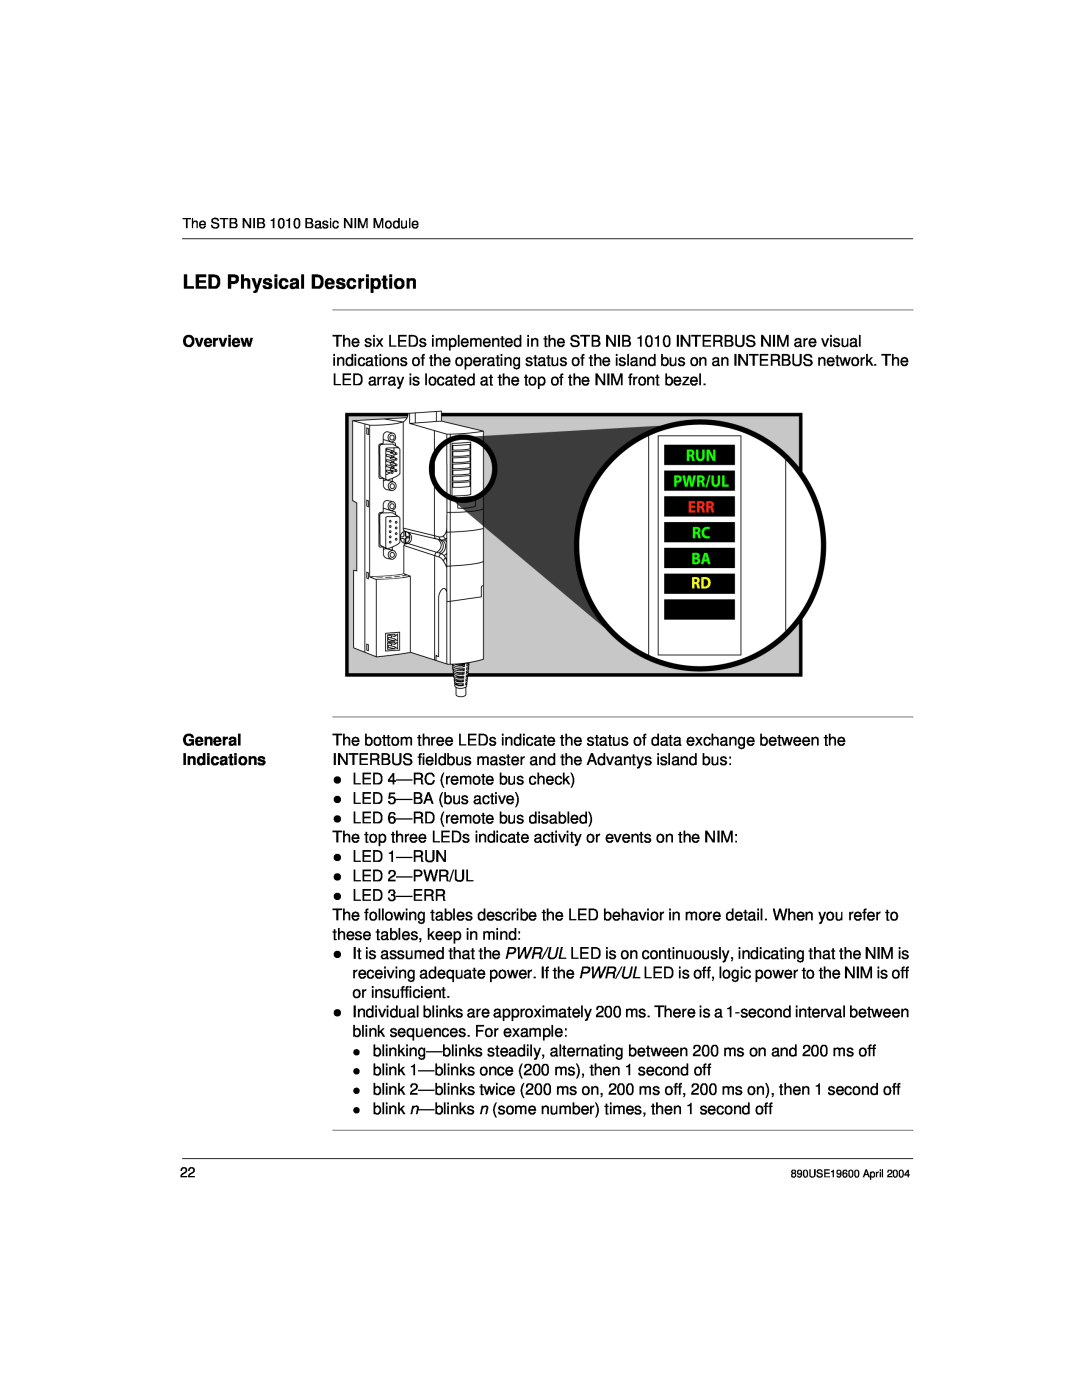 Schneider Electric 890USE19600 Version 1.0, INTERBUS Basic Network Interface Module manual LED Physical Description 